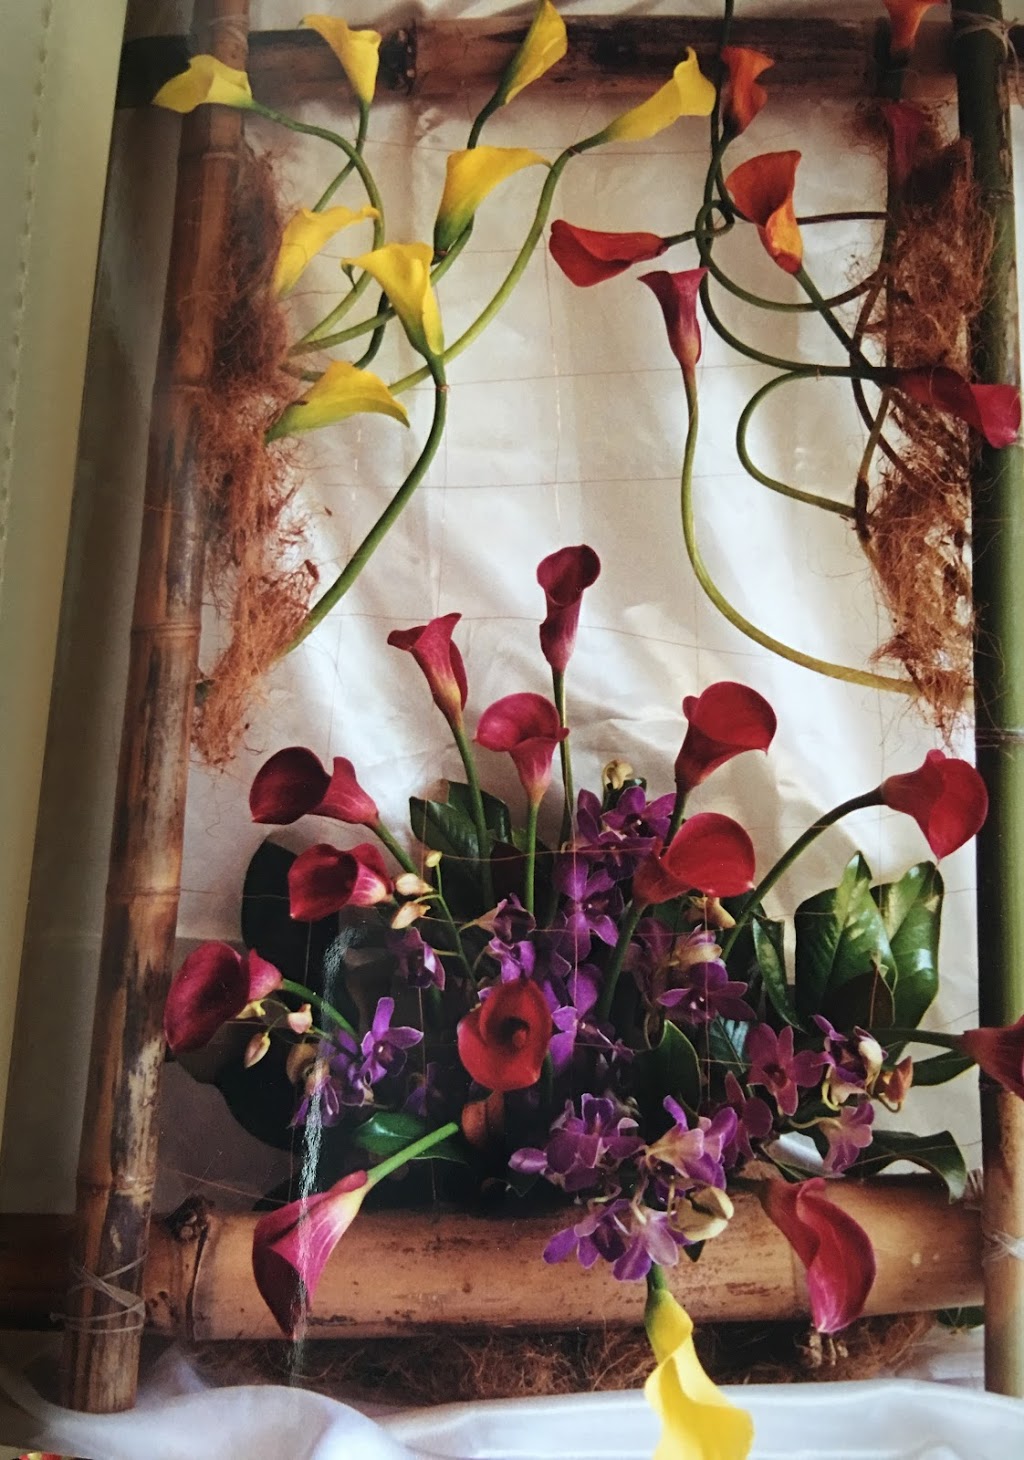 ACADEMY OF FLORAL ART Floristry Training College | Singleton Rd,, Wisemans Ferry NSW 2775, Australia | Phone: (02) 9653 9651